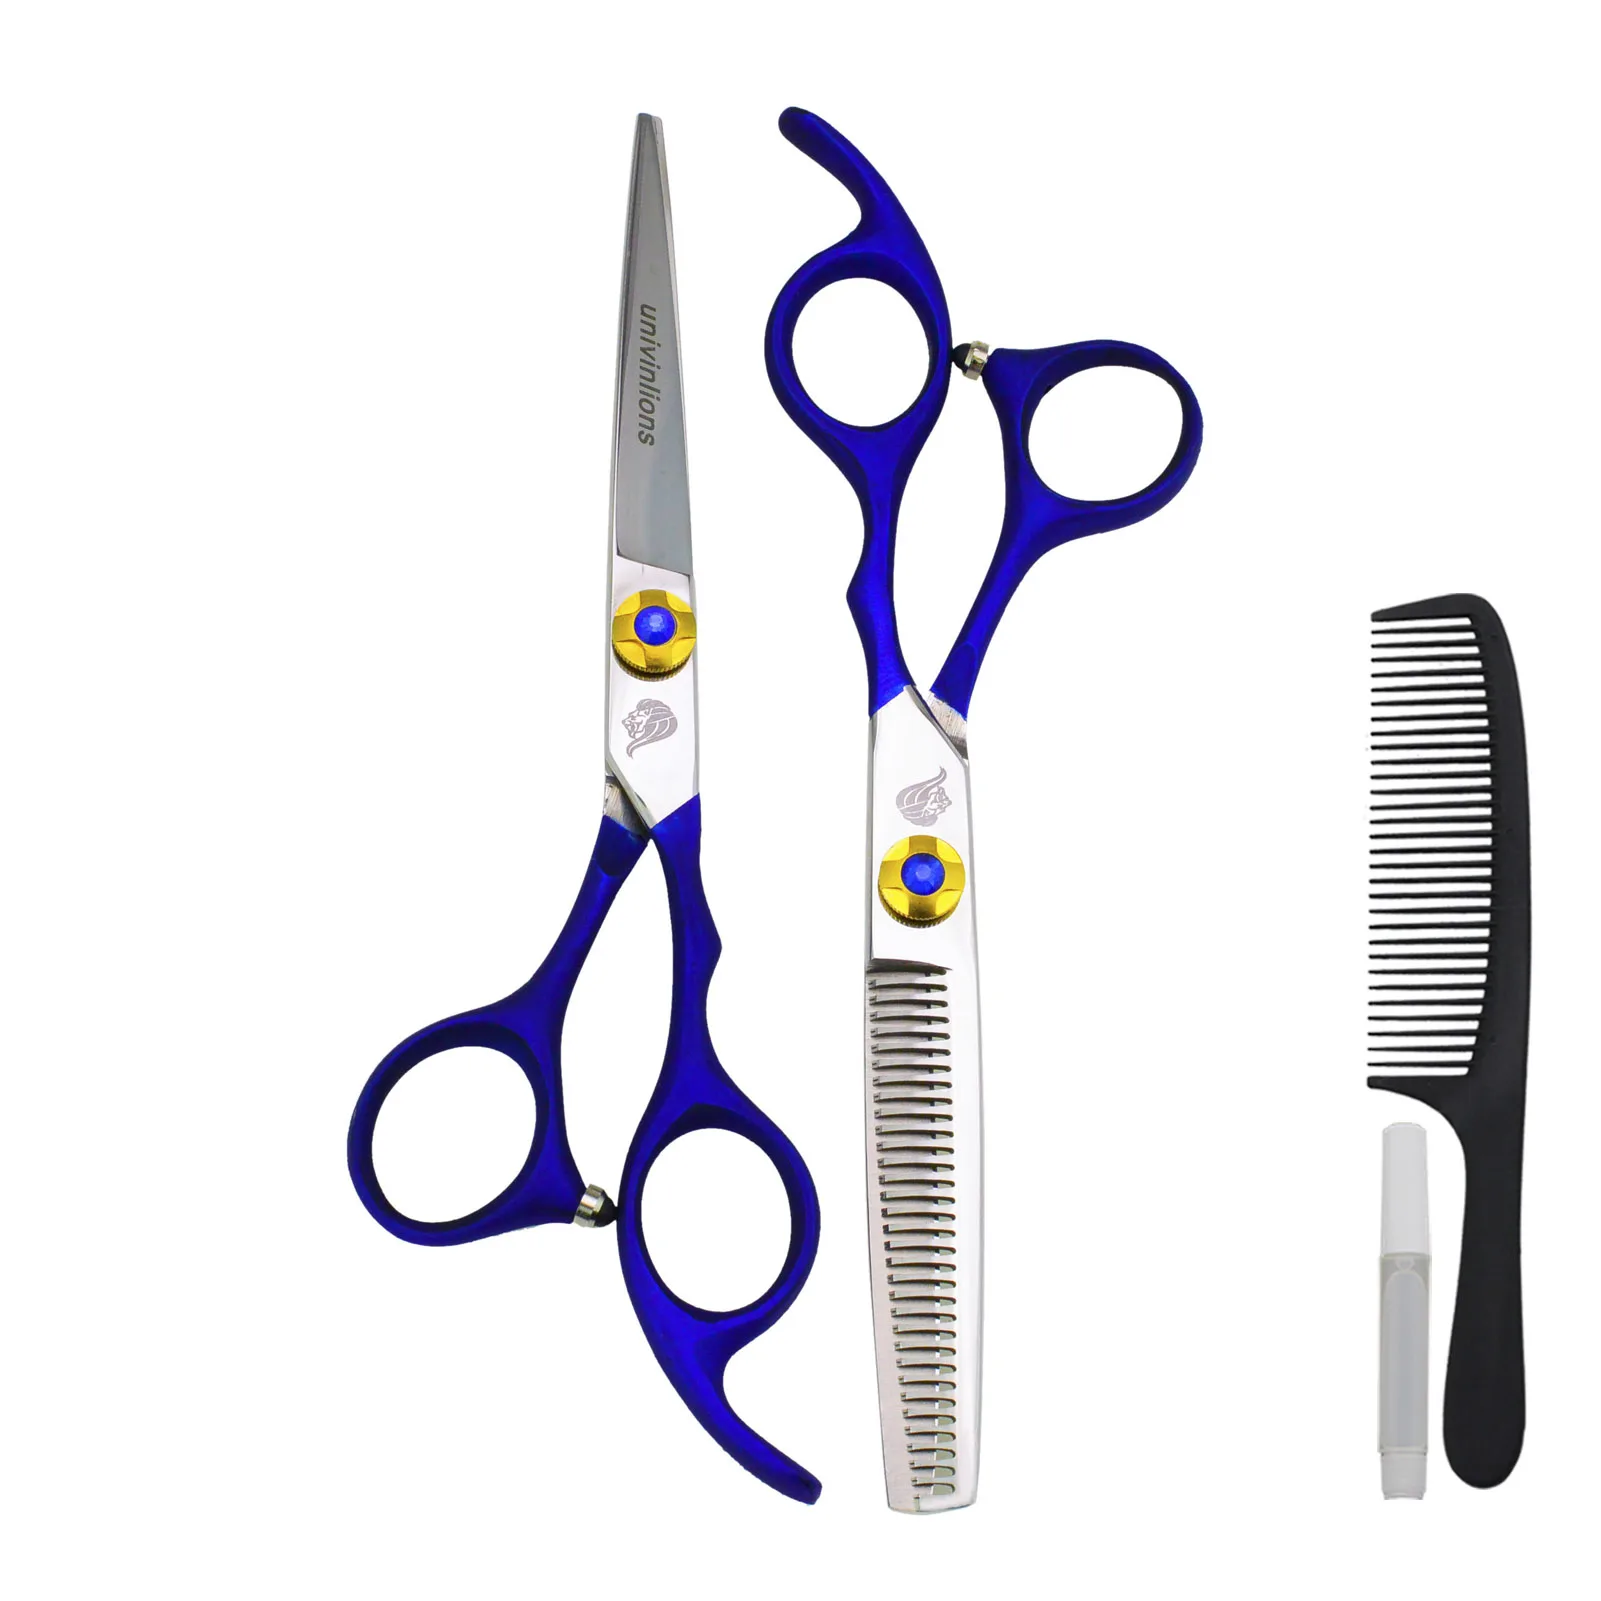 

6 inch New Blue Barber Accessories Professional Hair Scissors Janpanese Steel Salon Thinning Shears Hairdressing Scissors Set